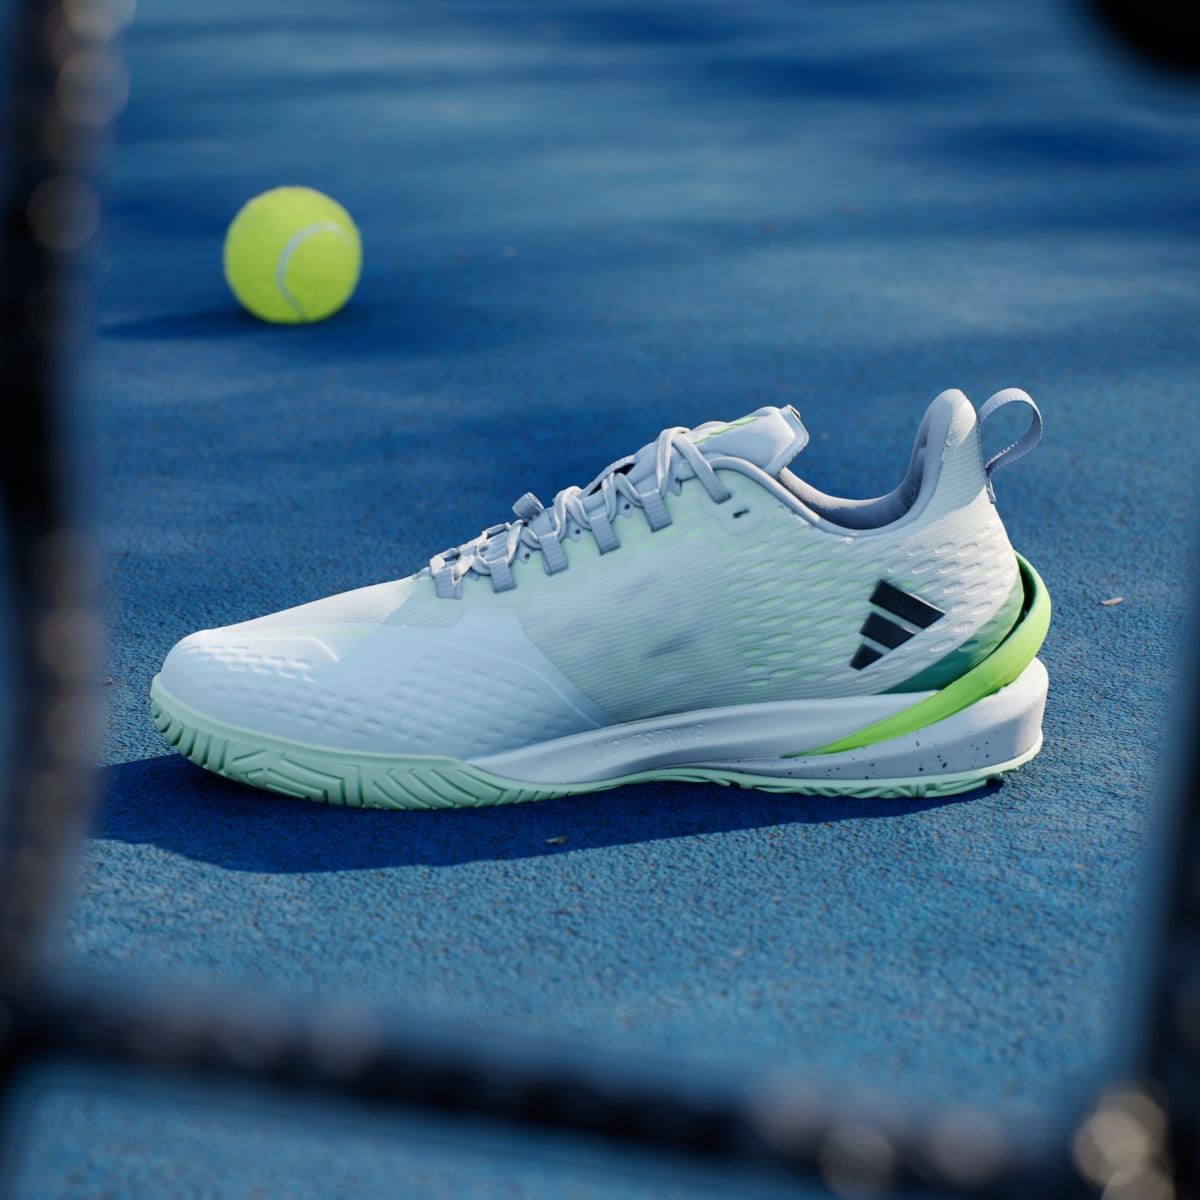 Adidas Tenis adizero Cybersonic para Tenis. 7